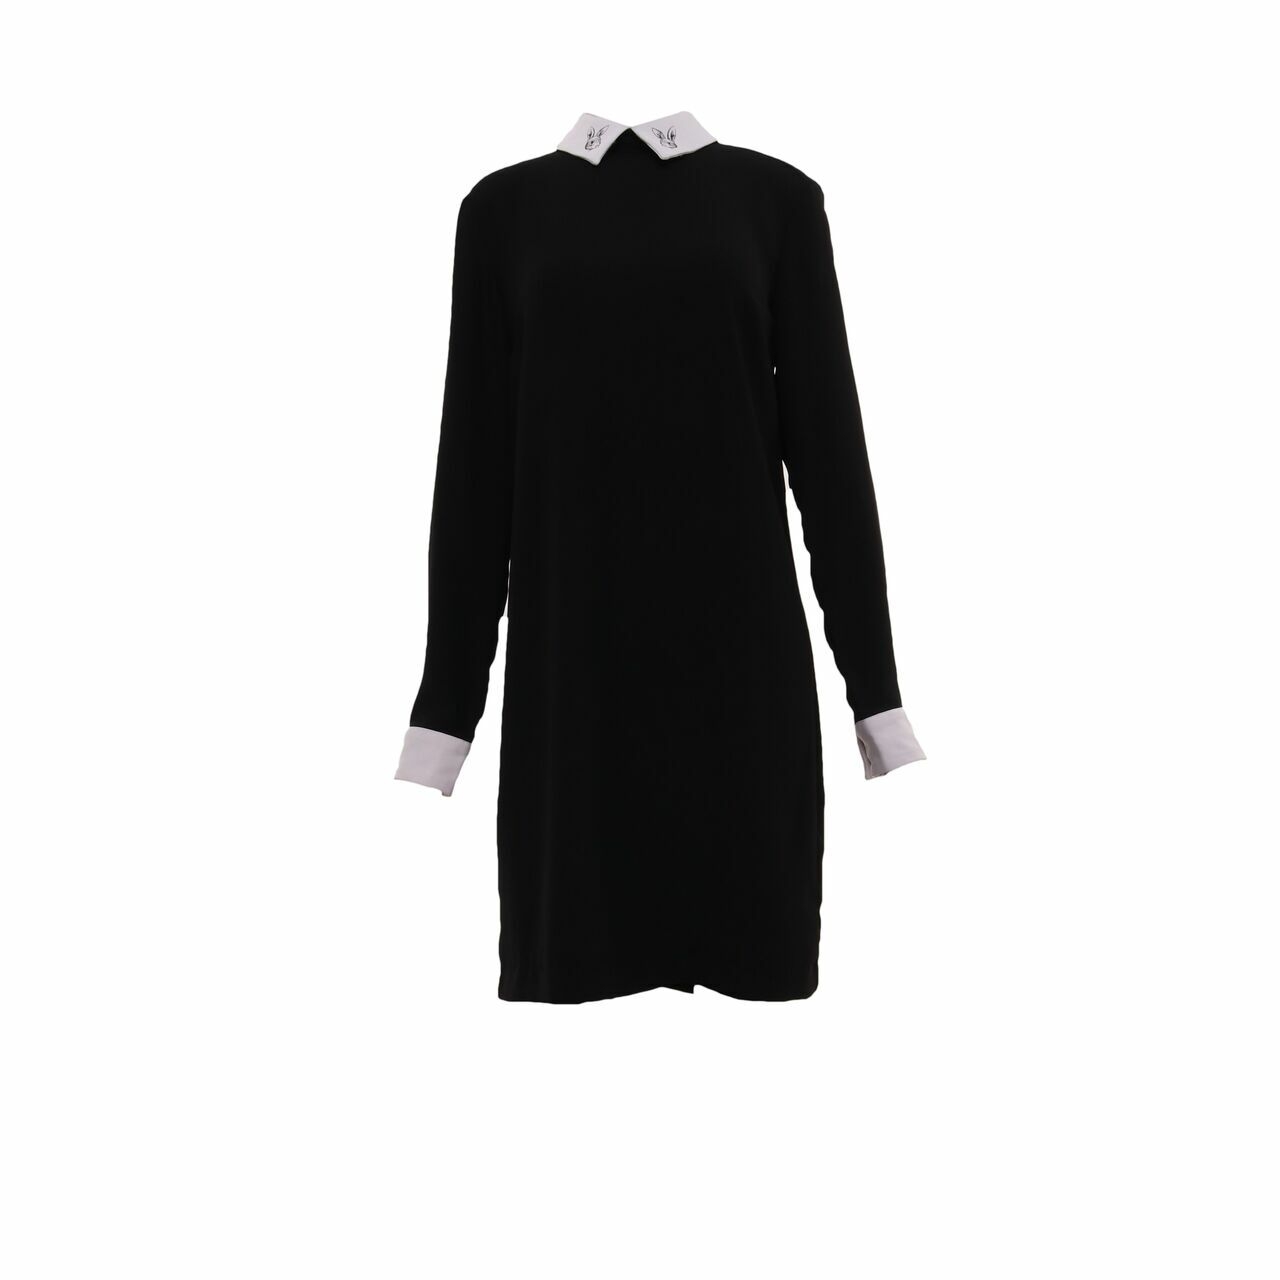 Victoria Beckham For Target Black Shirt Mini Dress